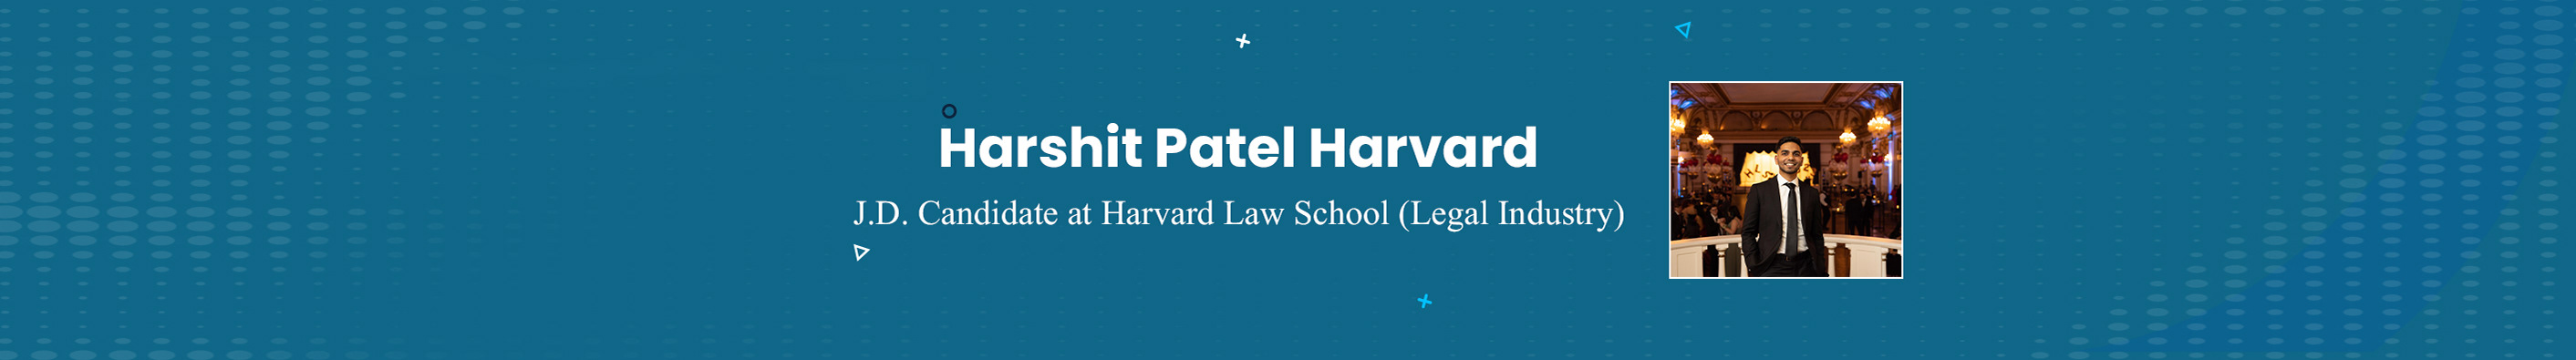 Harshit Patel Harvard's profile banner